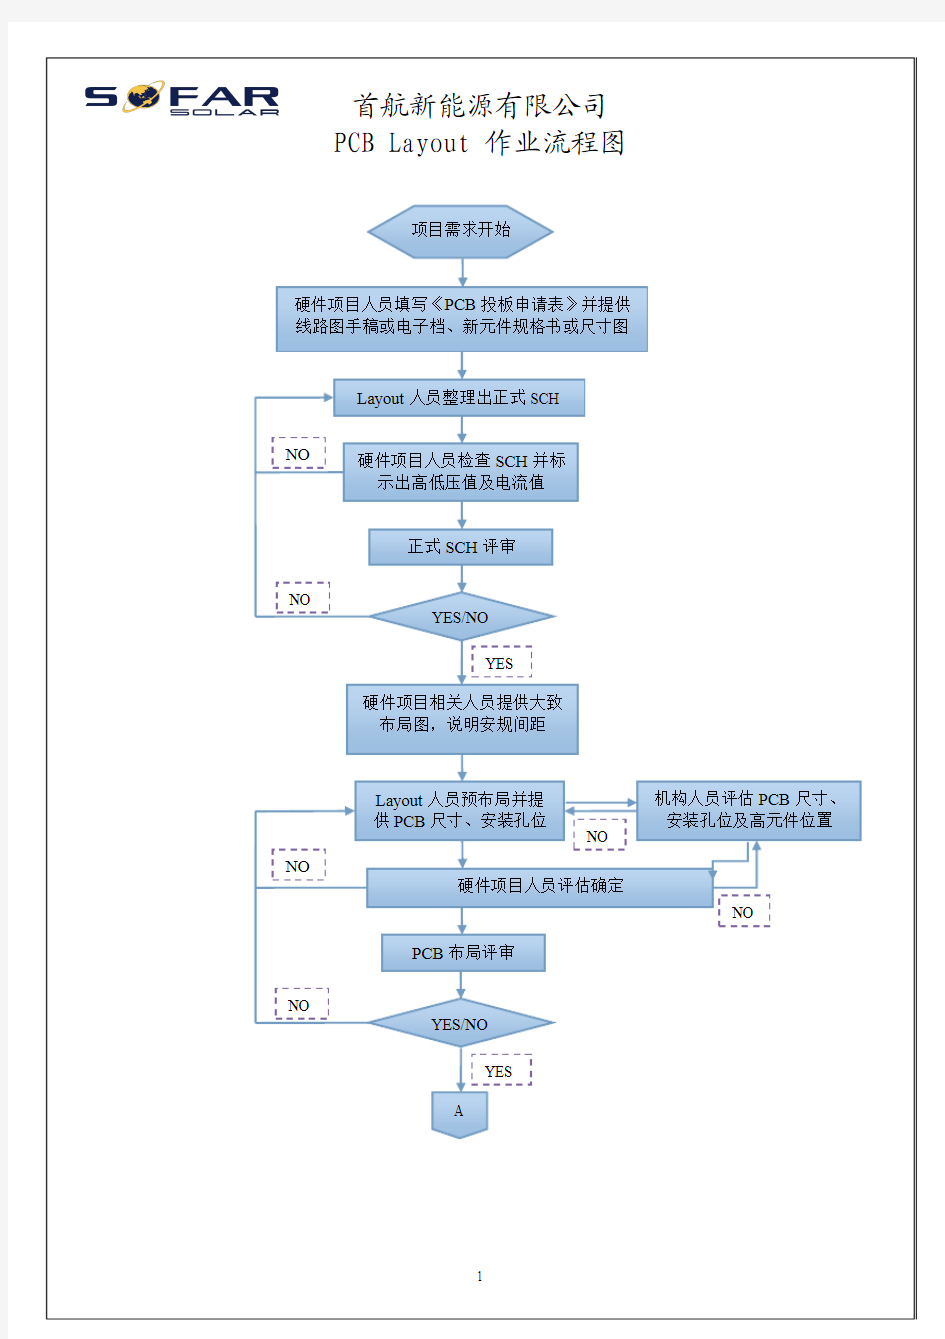 PCB Layout 流程图